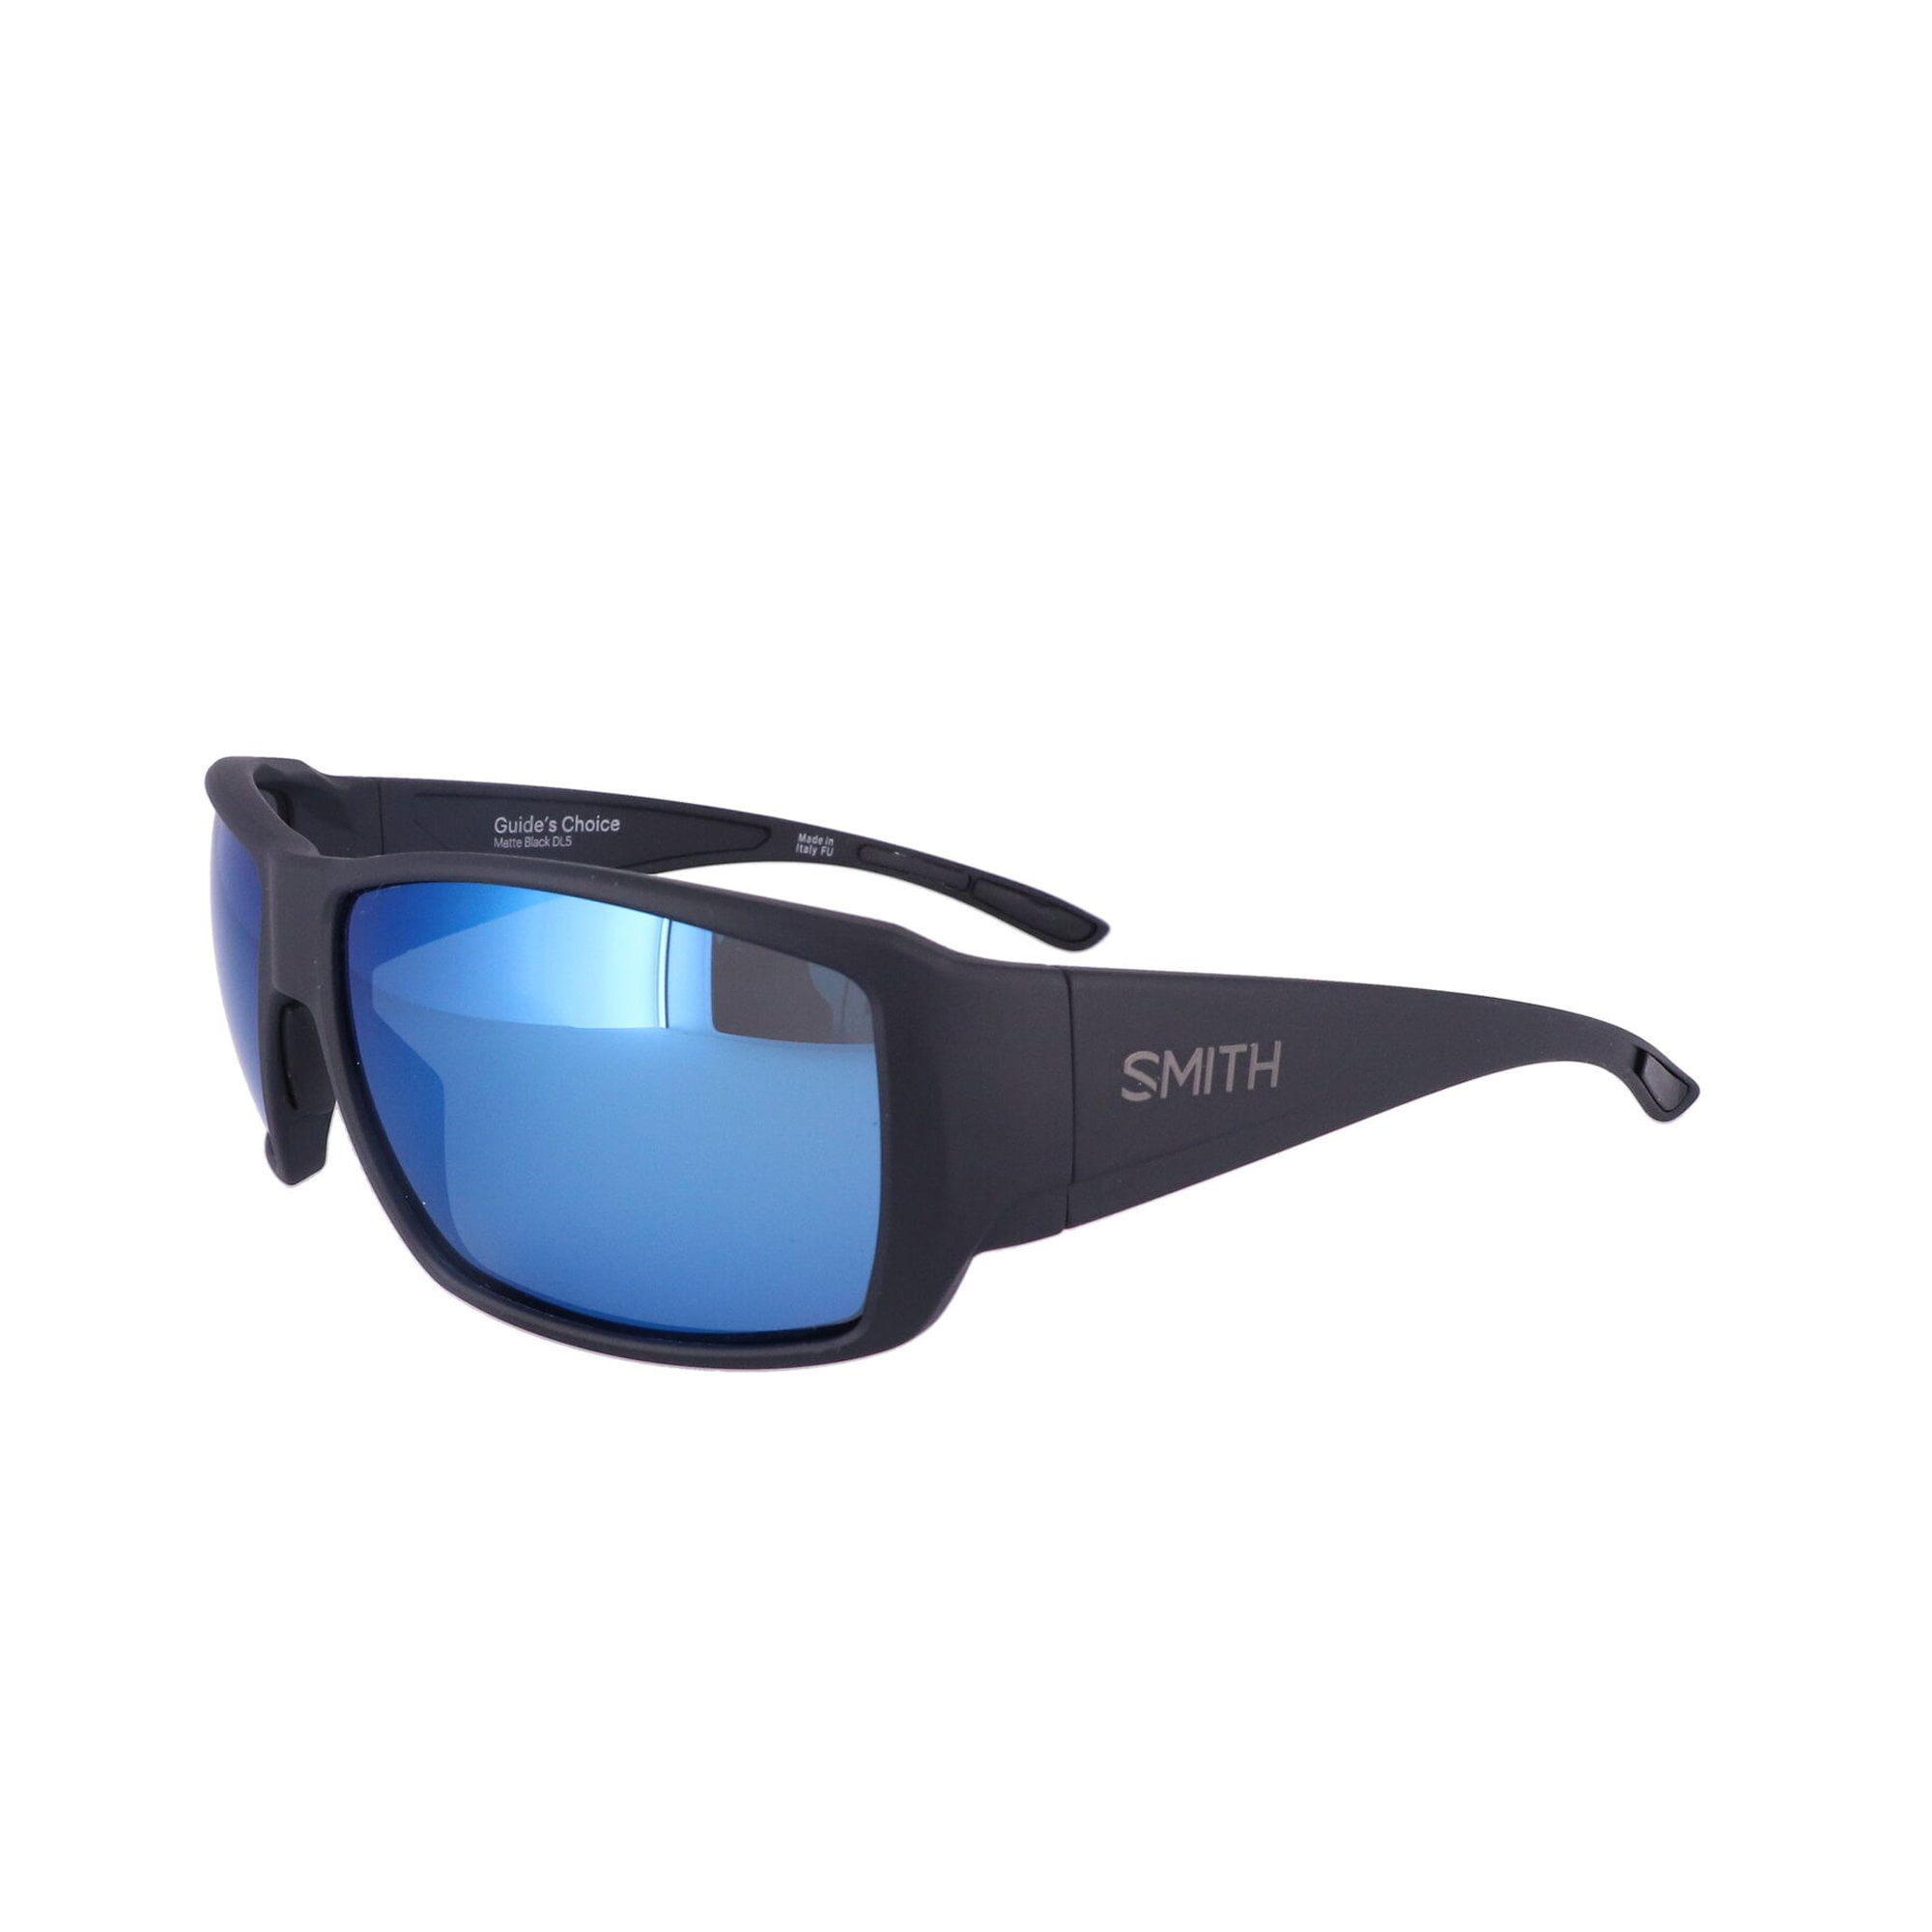 NEW Smith Dockside Sunglasses-Matte Black-Chromapop Blue Polarized-SAME DAY SHIP 